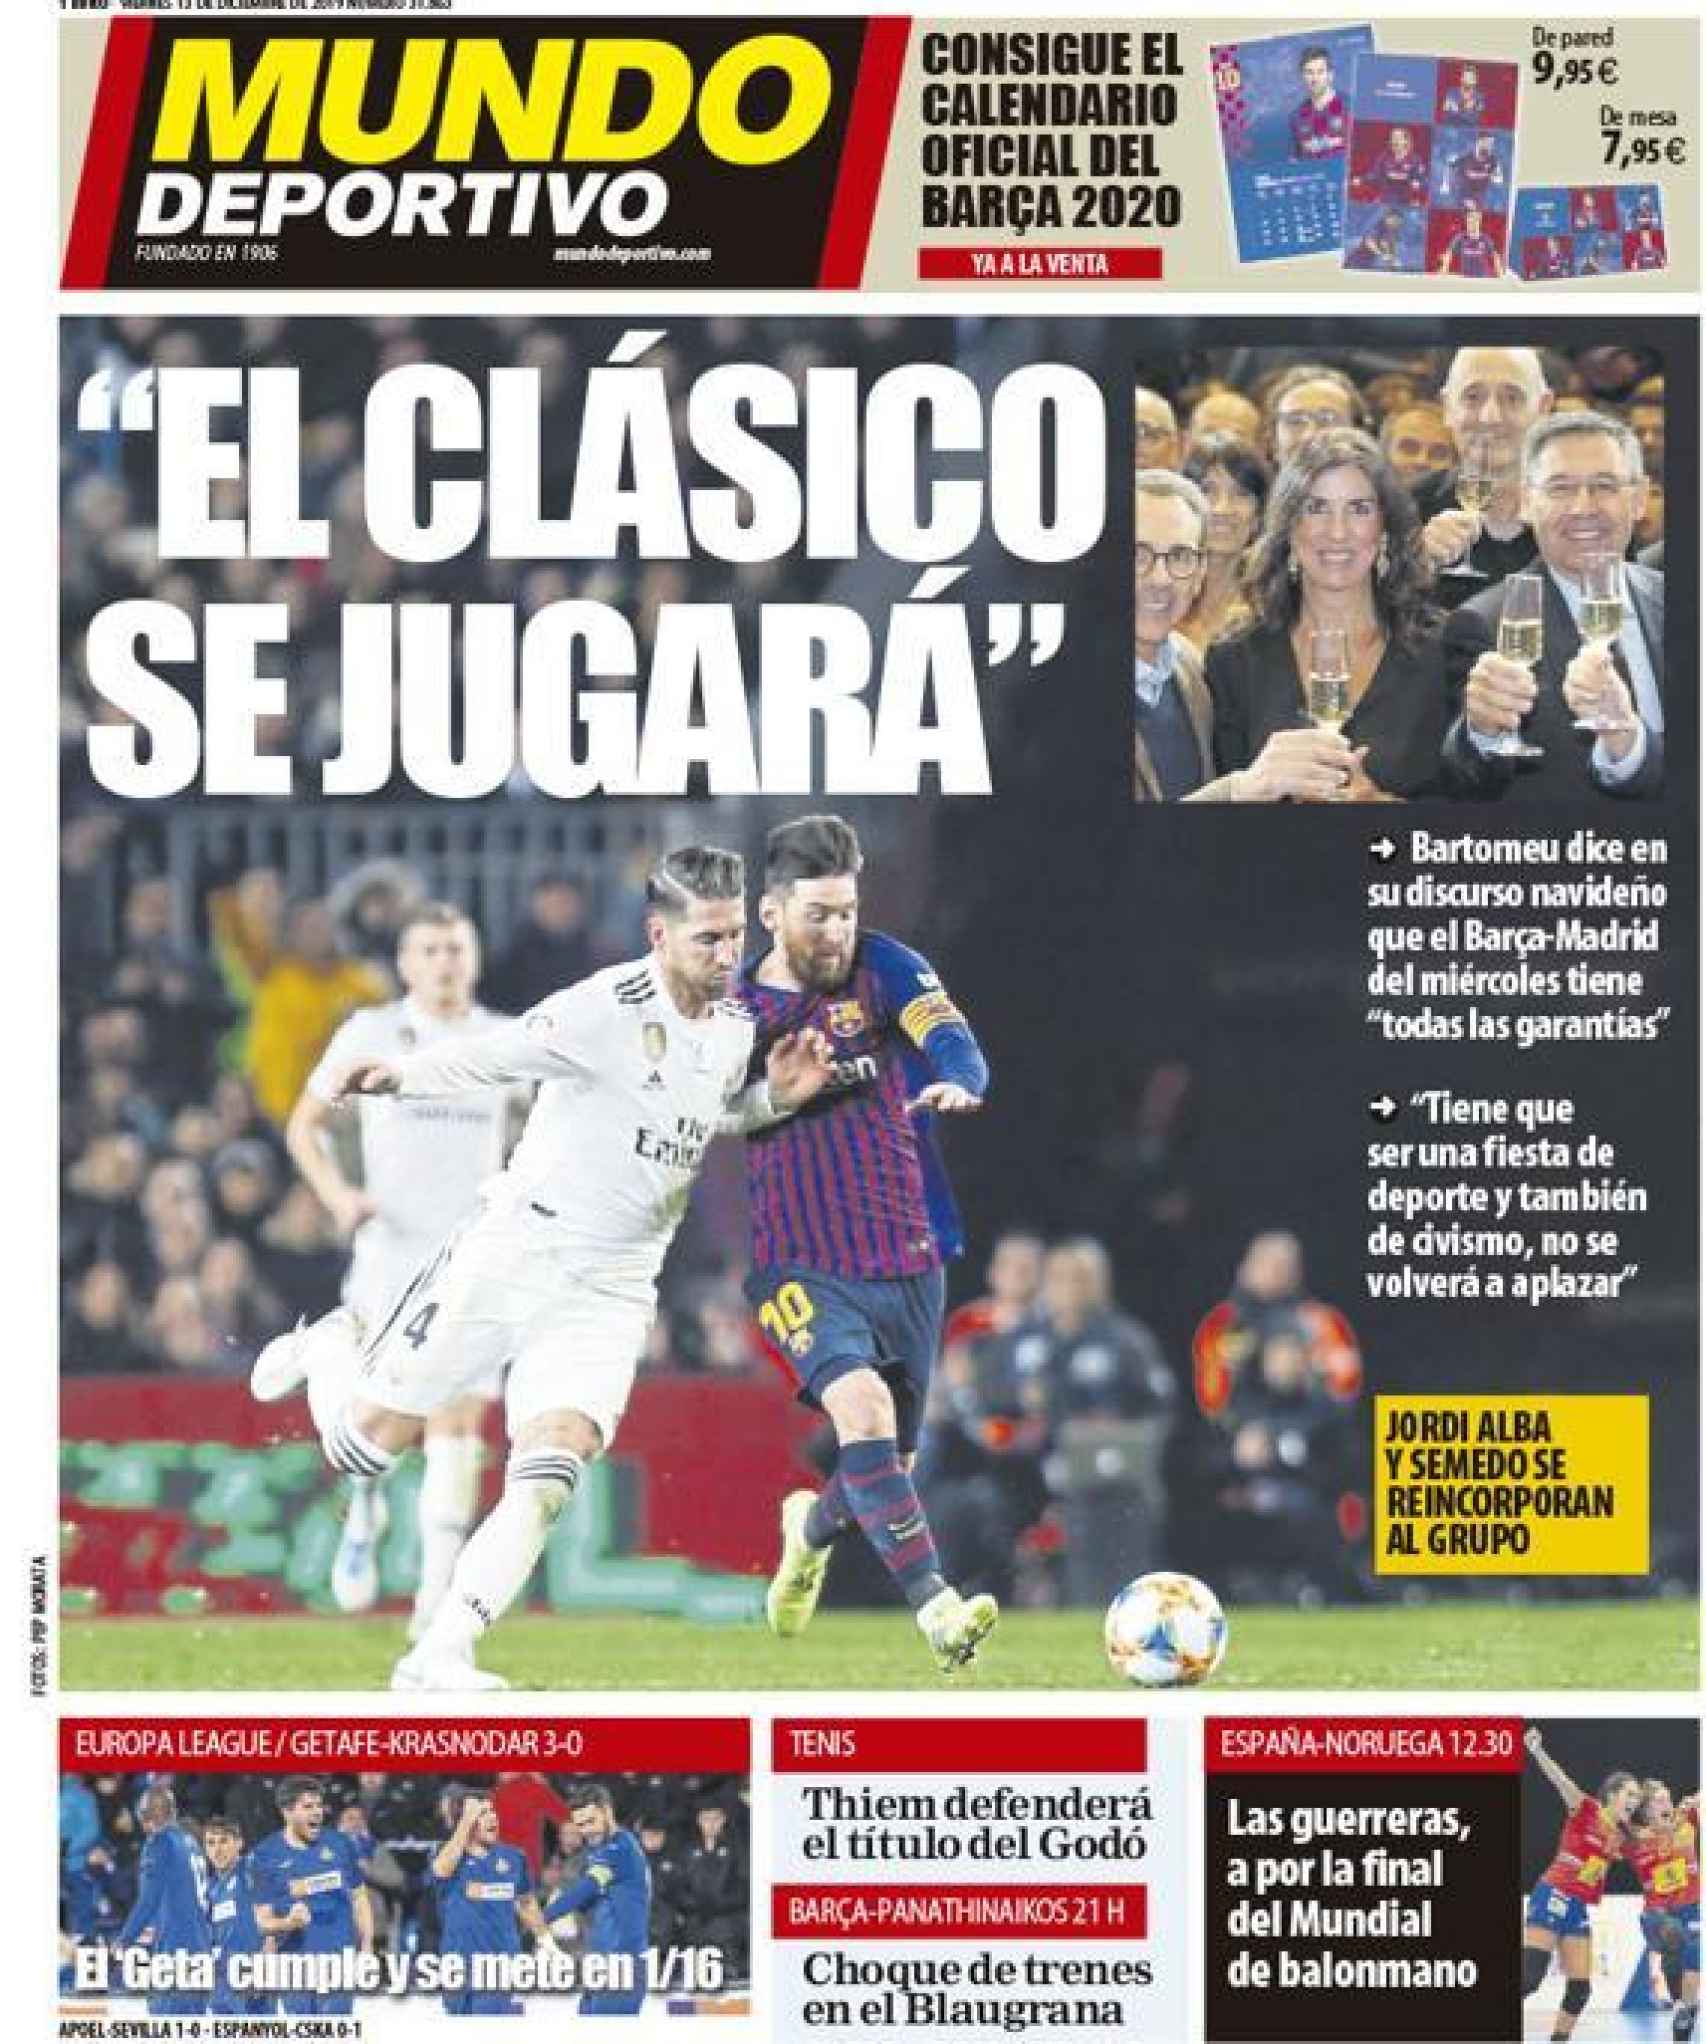 La portada del diario Mundo Deportivo (13/12/2019)1706 x 2043